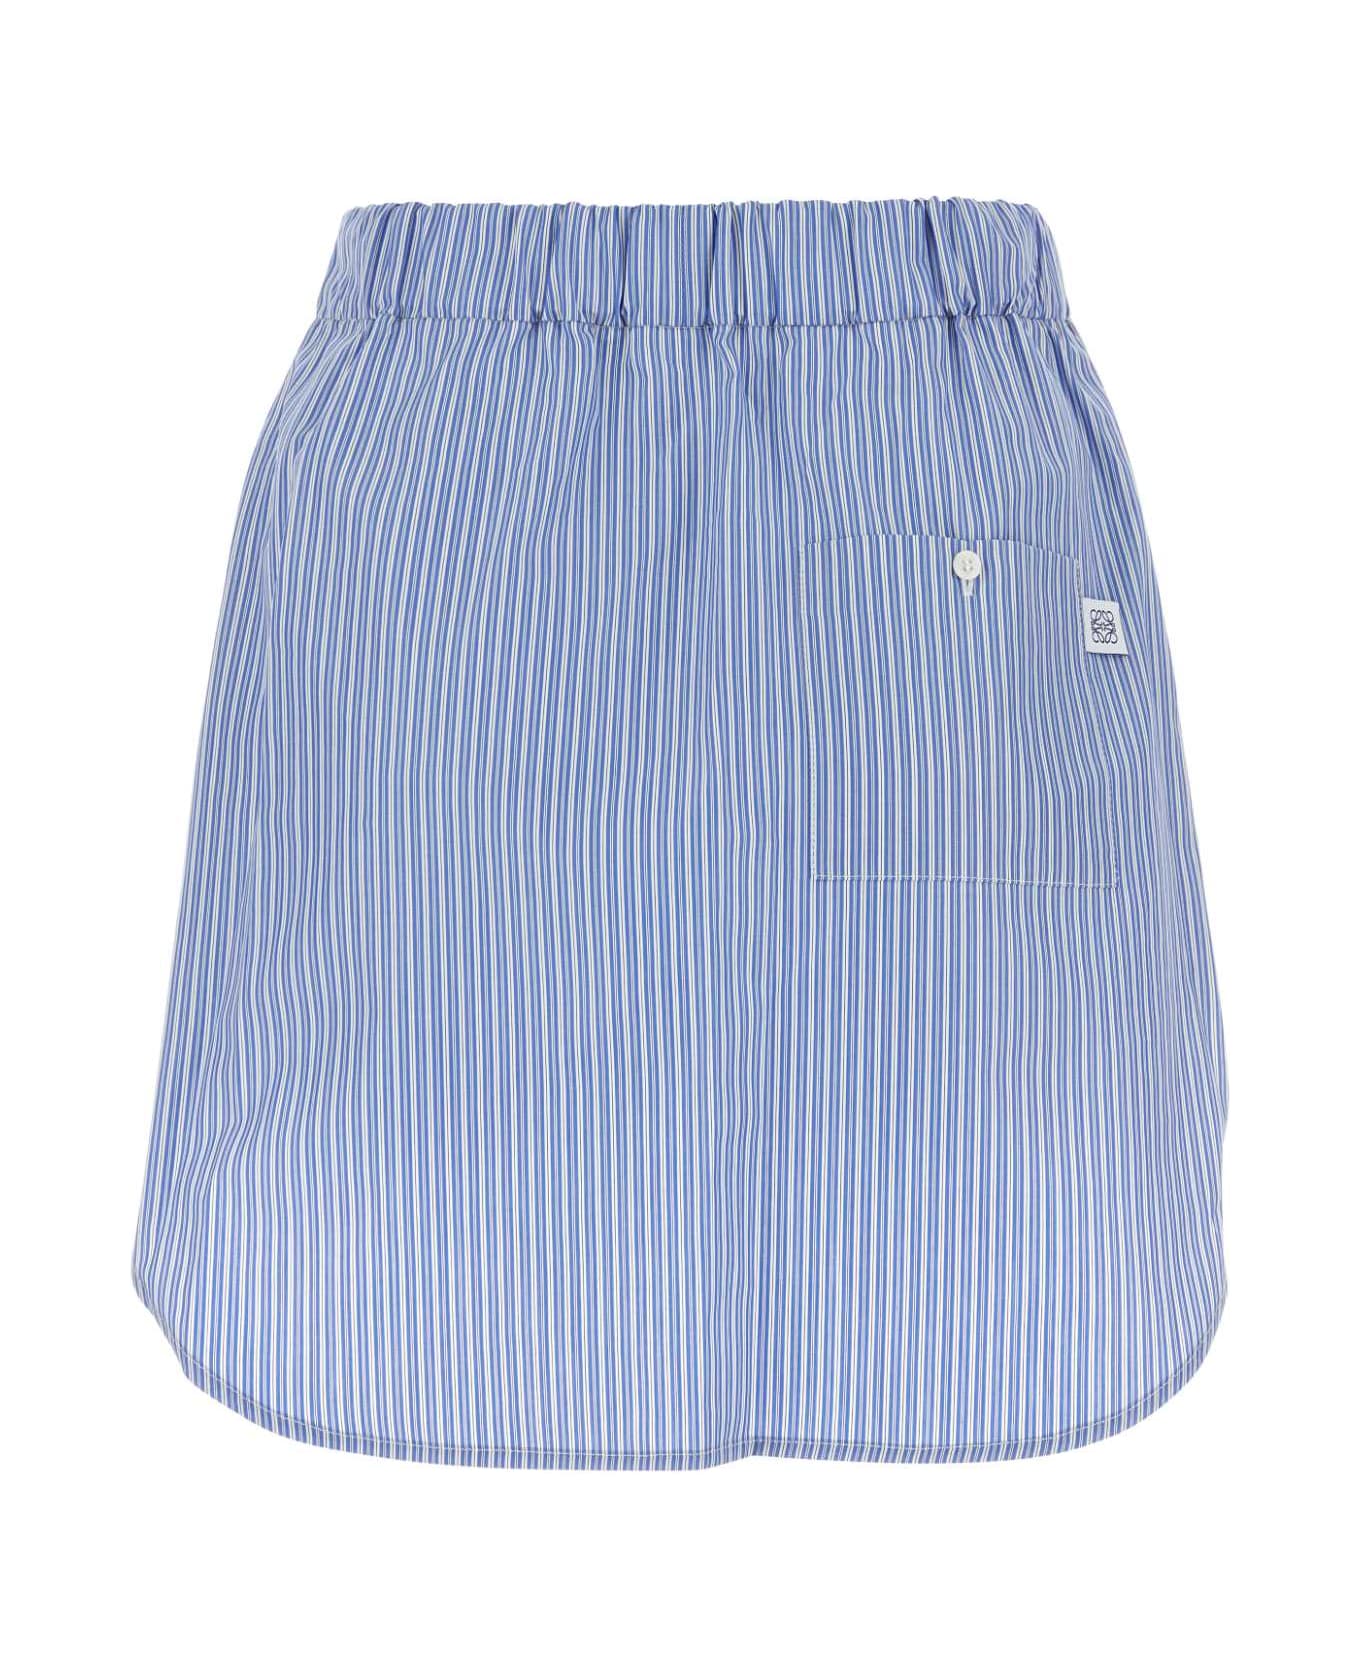 Loewe Printed Cotton Mini Skirt - BLUEWHITE